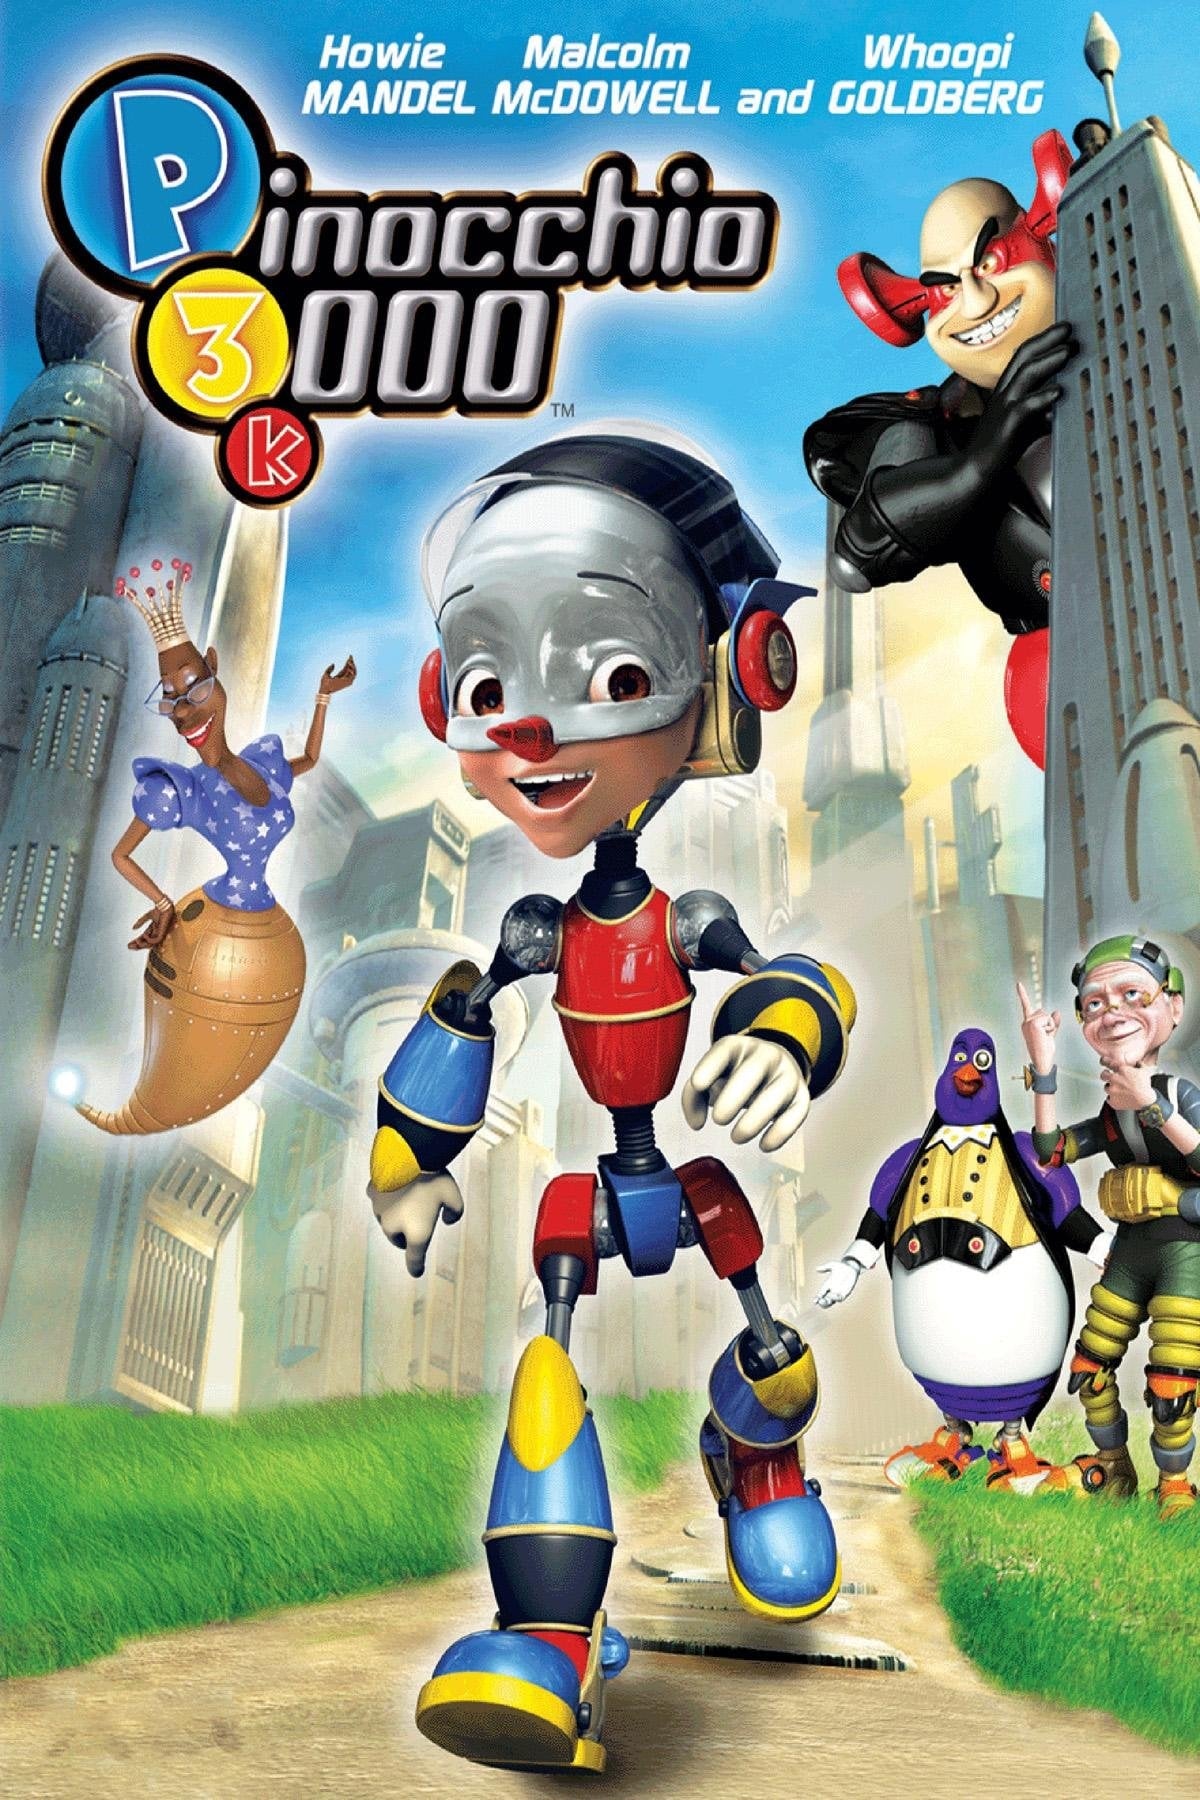 P3K: Pinocchio 3000 (2004)